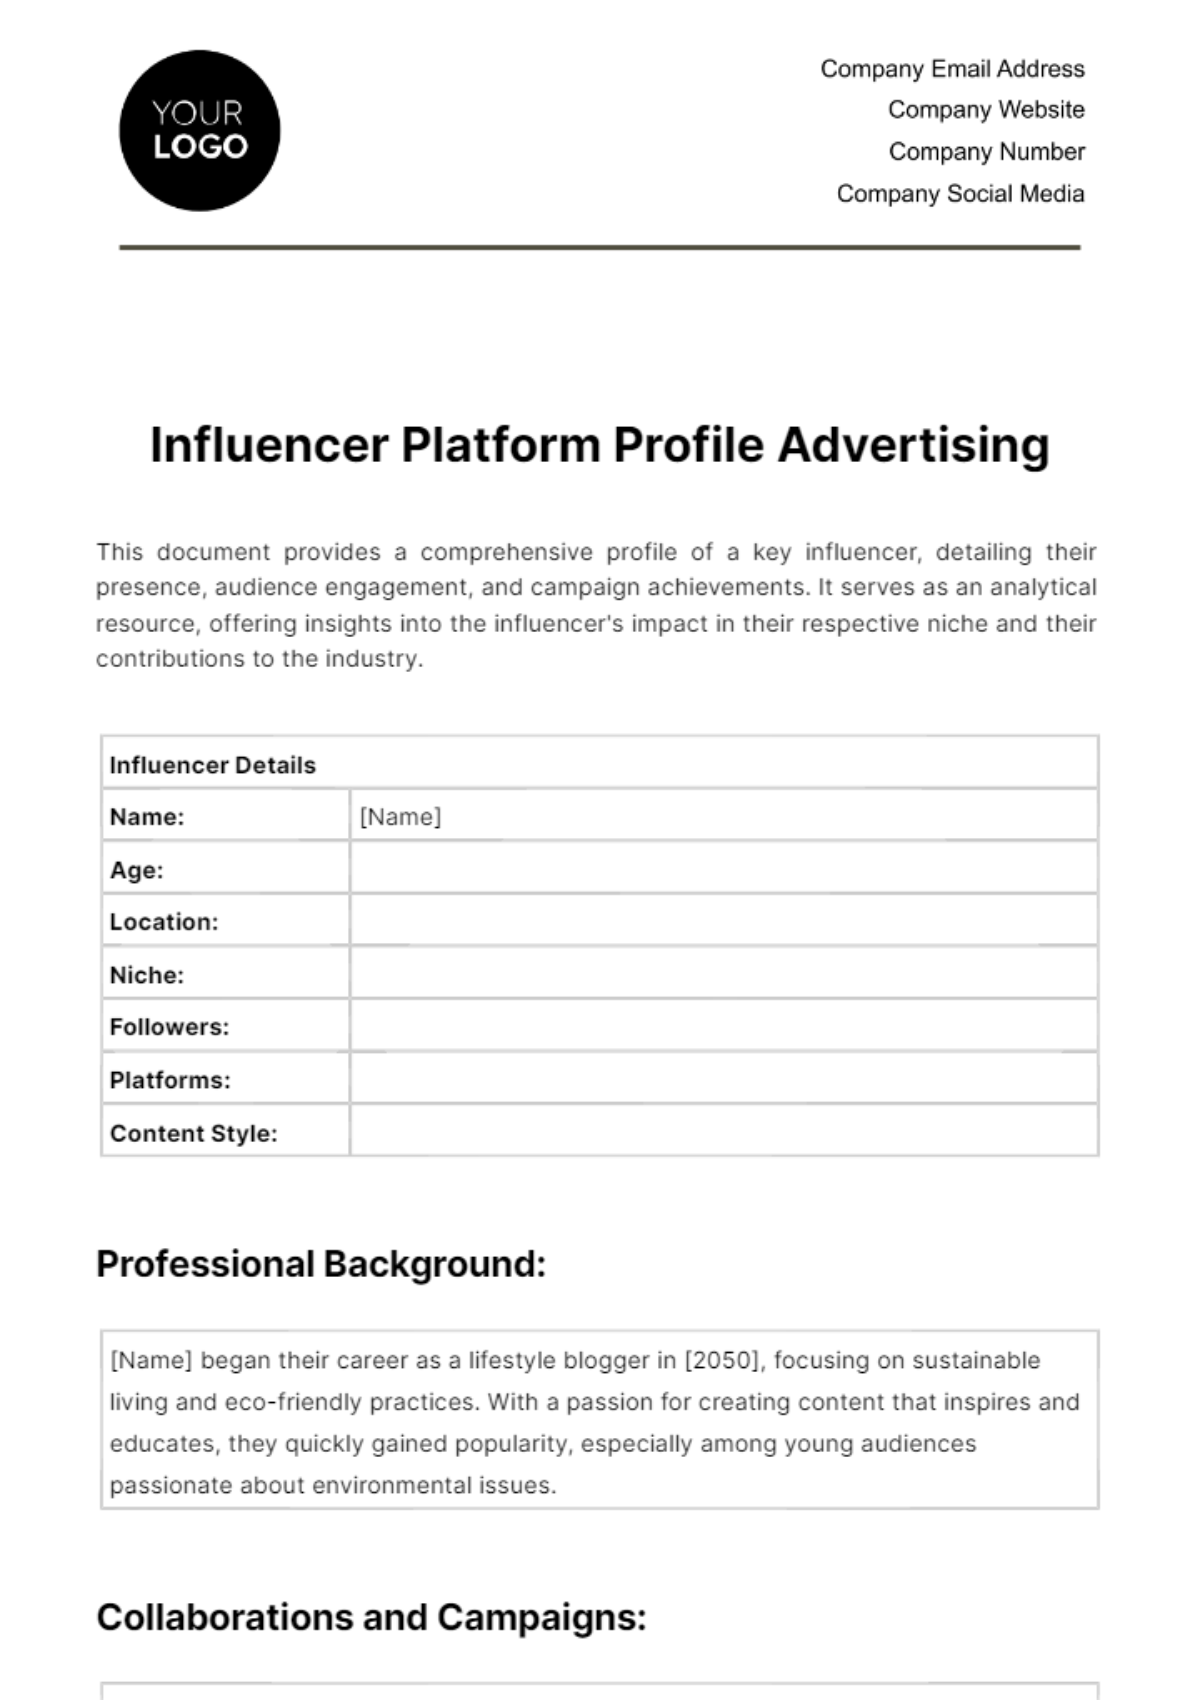 Free Influencer Platform Profile Advertising Template